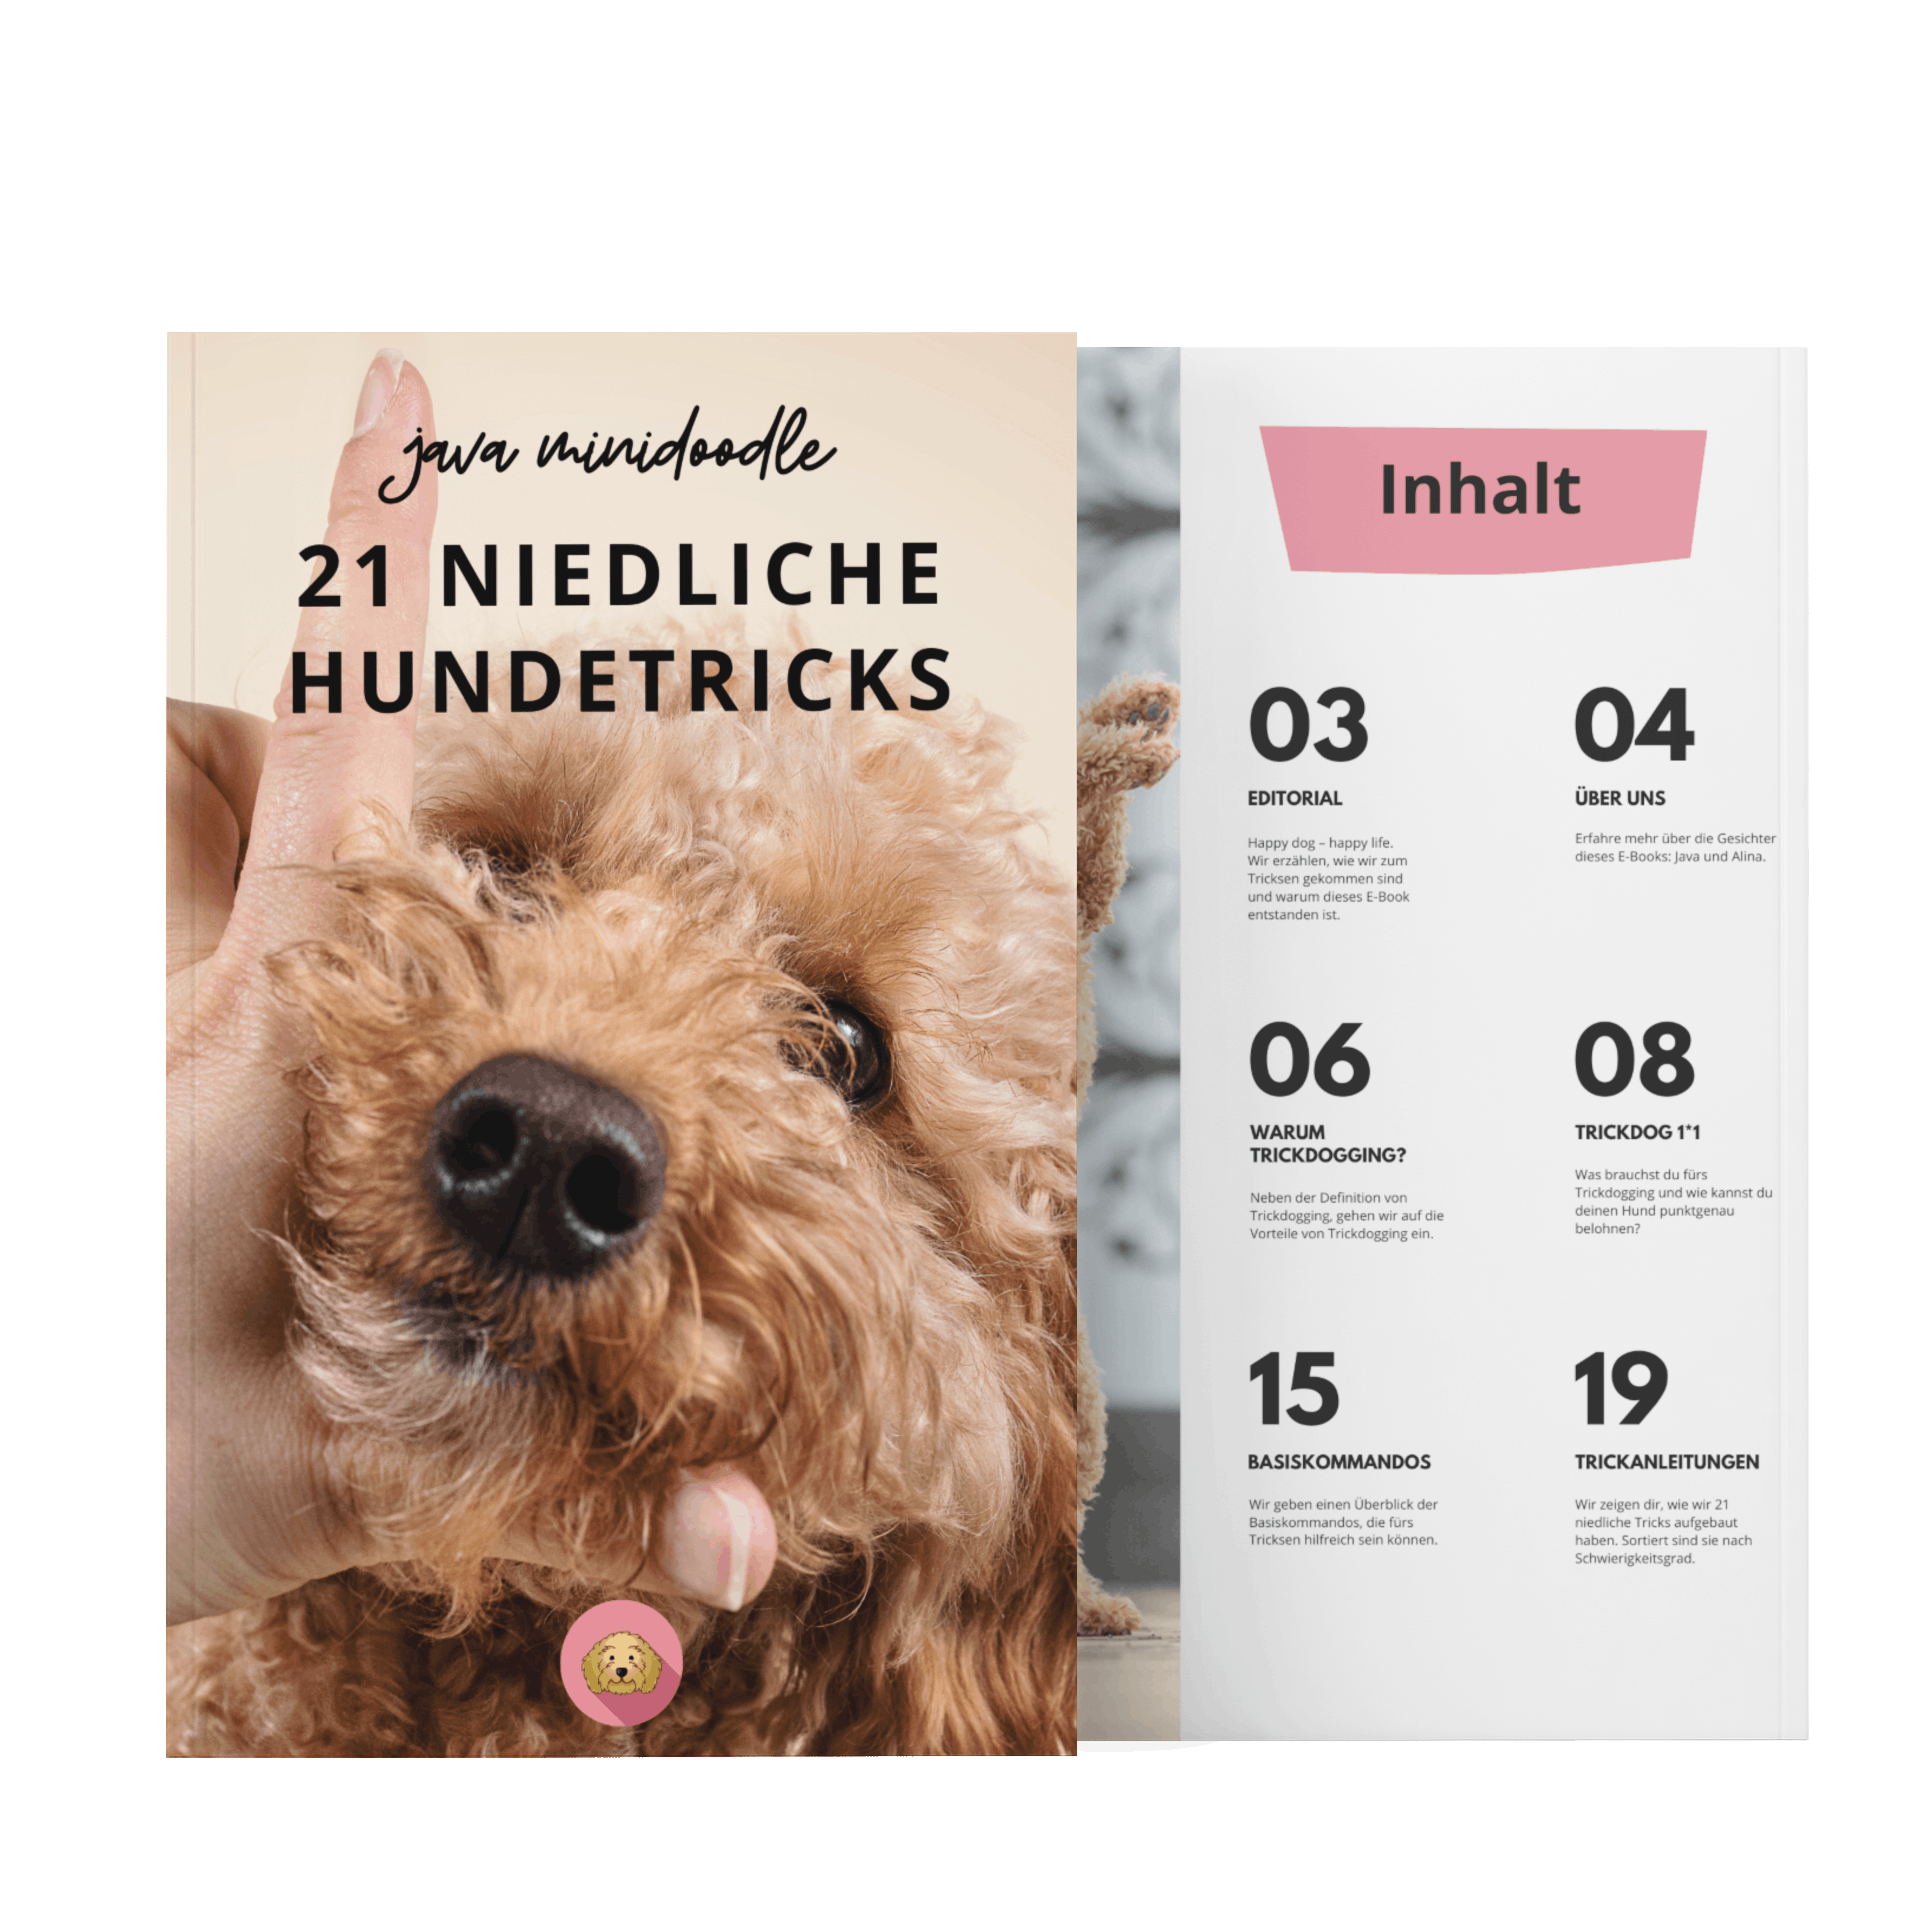 E-Book: Hundetricks lernen mit Java Minidoodle